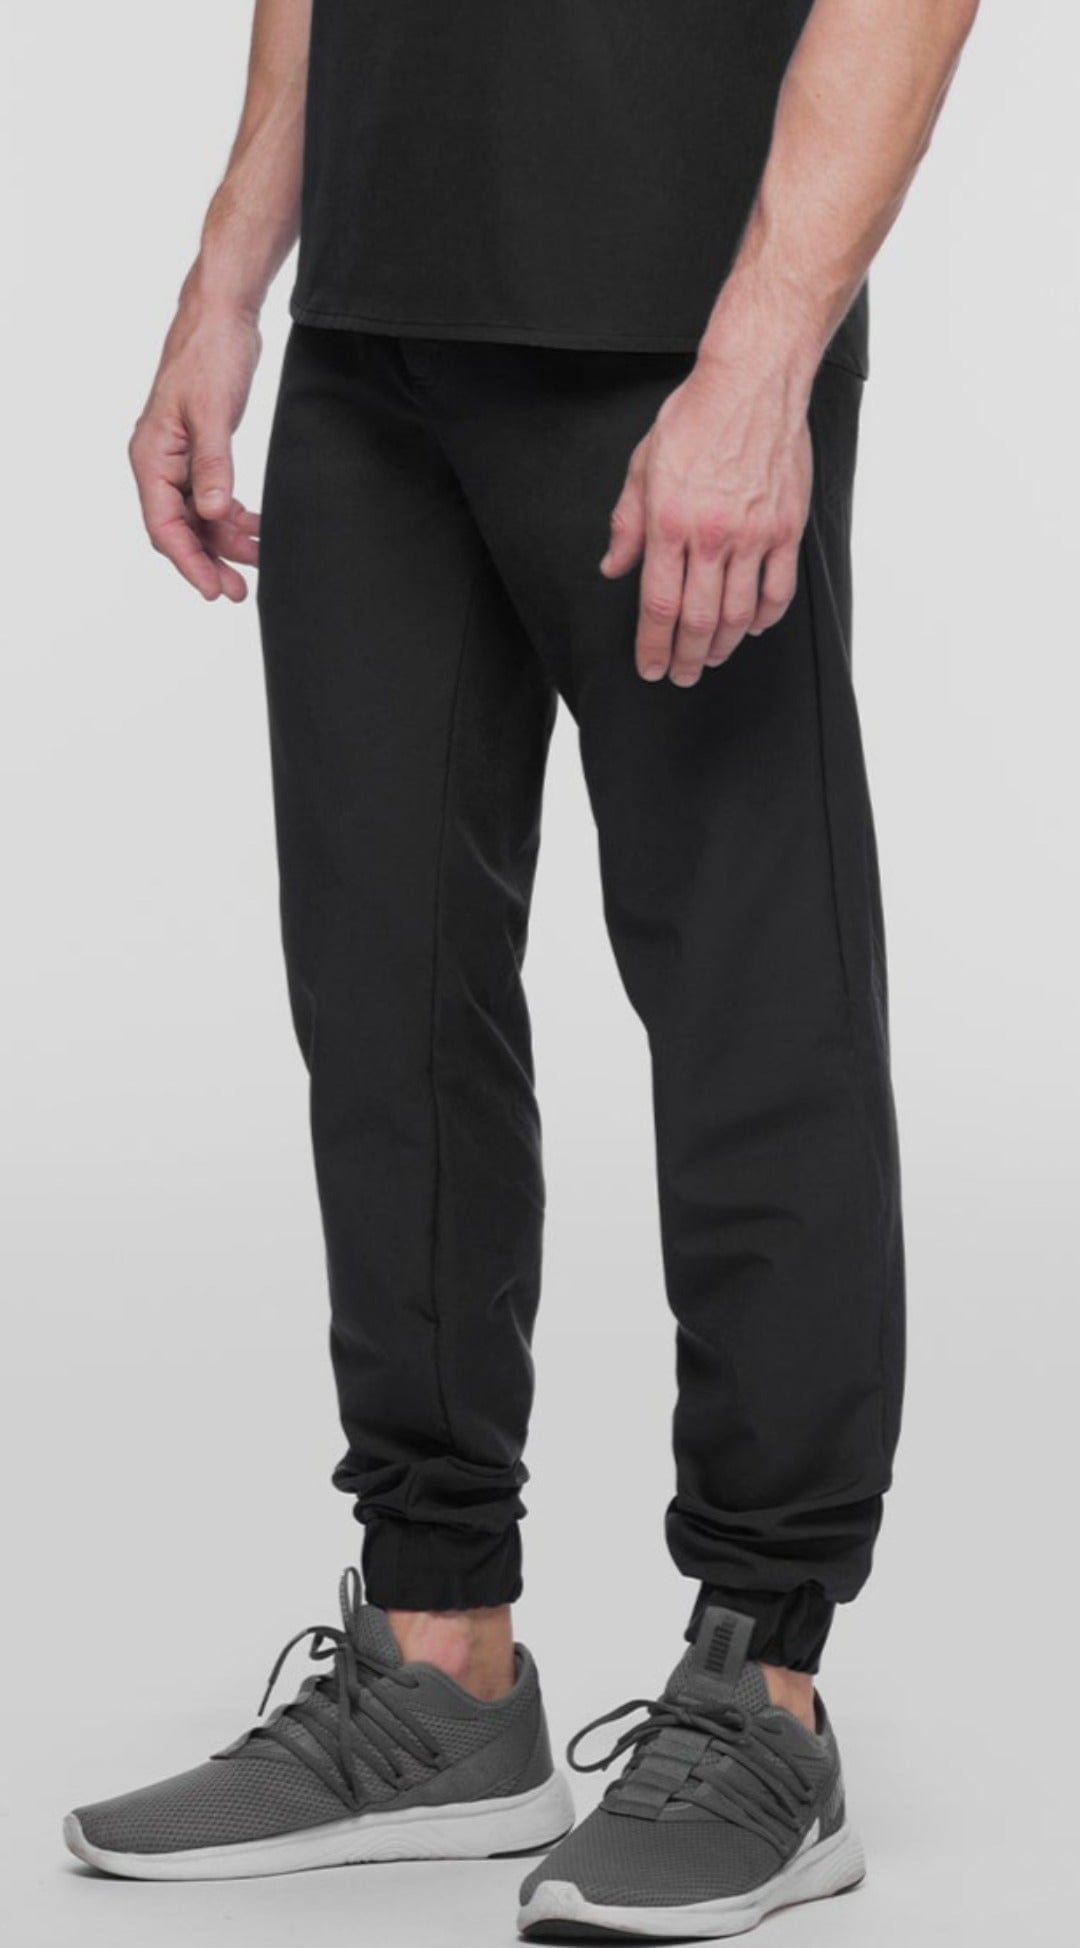 Kanaus® Pants Vanguard Total Black | Caballero - Kanaus